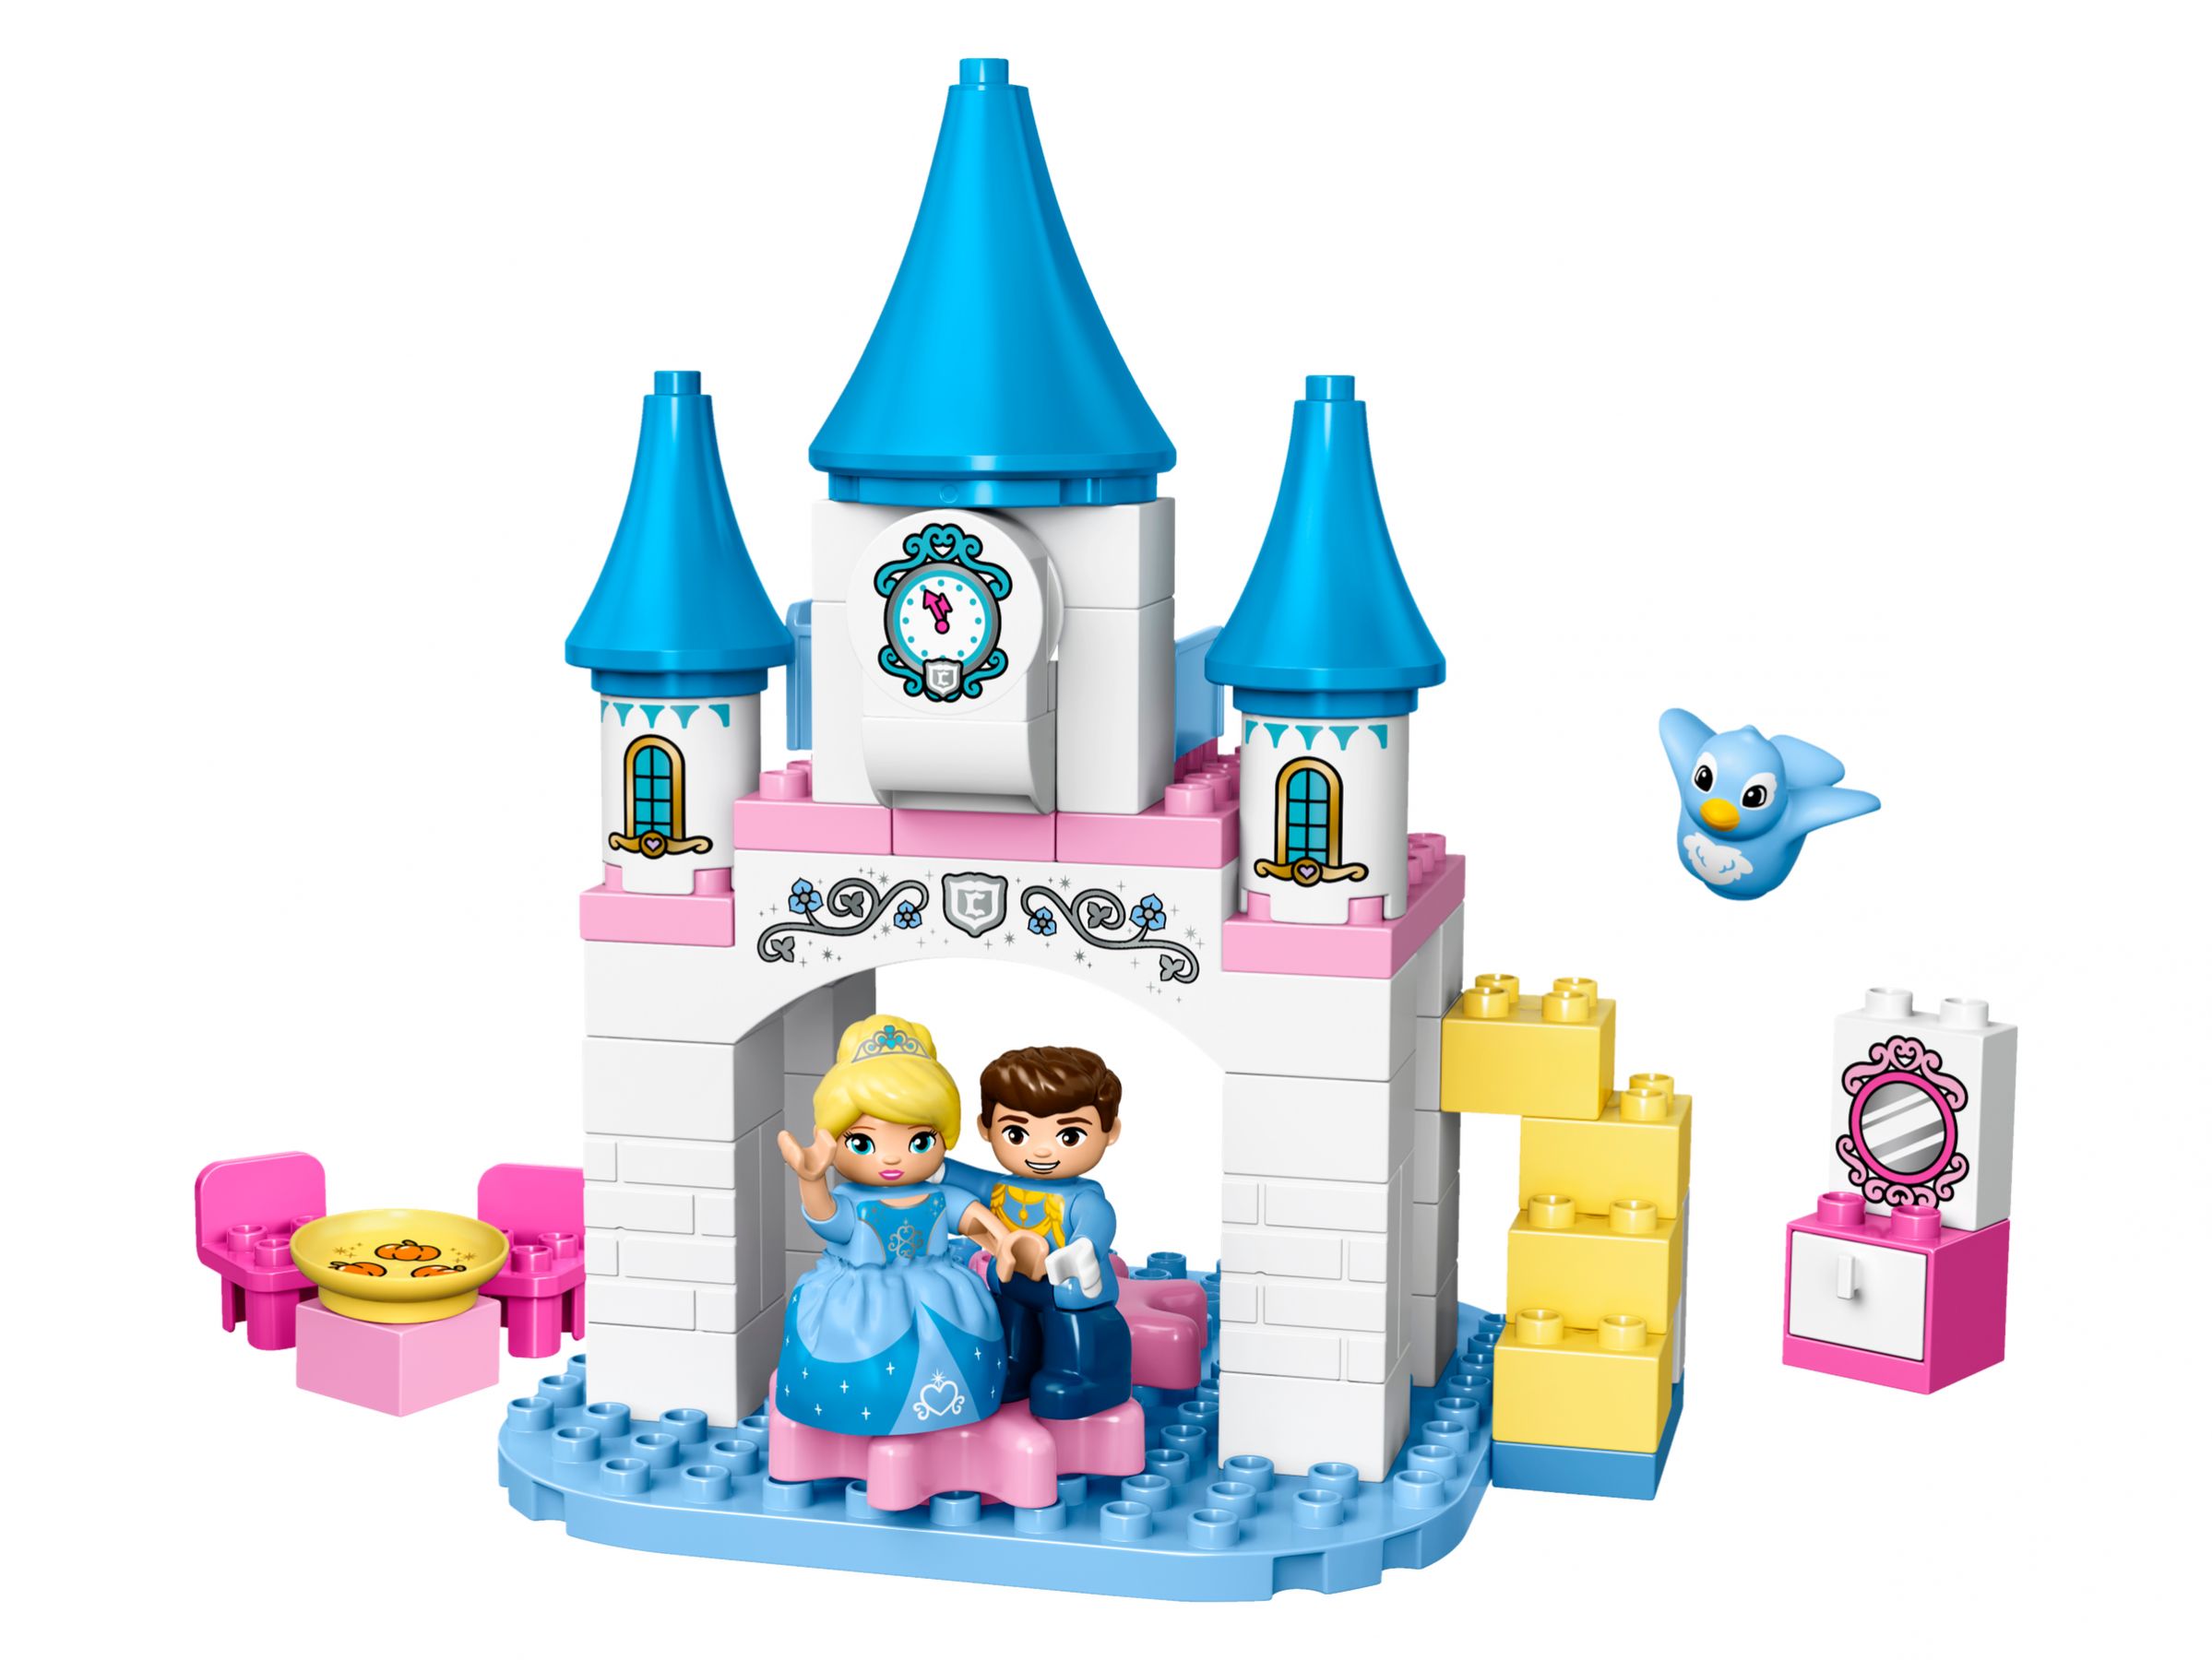 LEGO Duplo 10855 Cinderellas Märchenschloss LEGO_10855.jpg